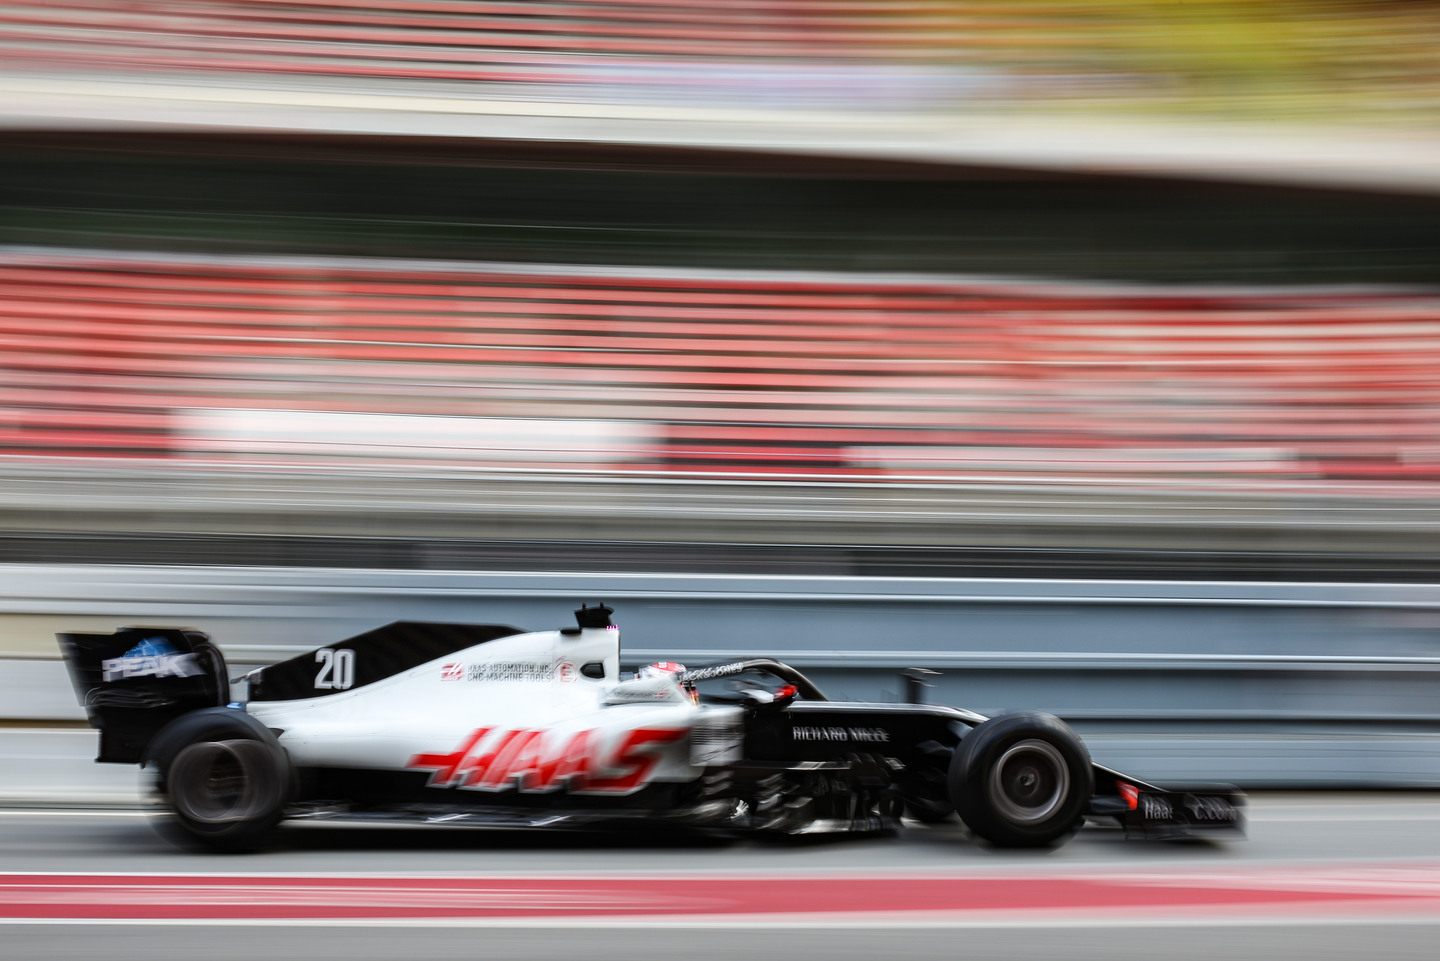 Haas © the-race.com